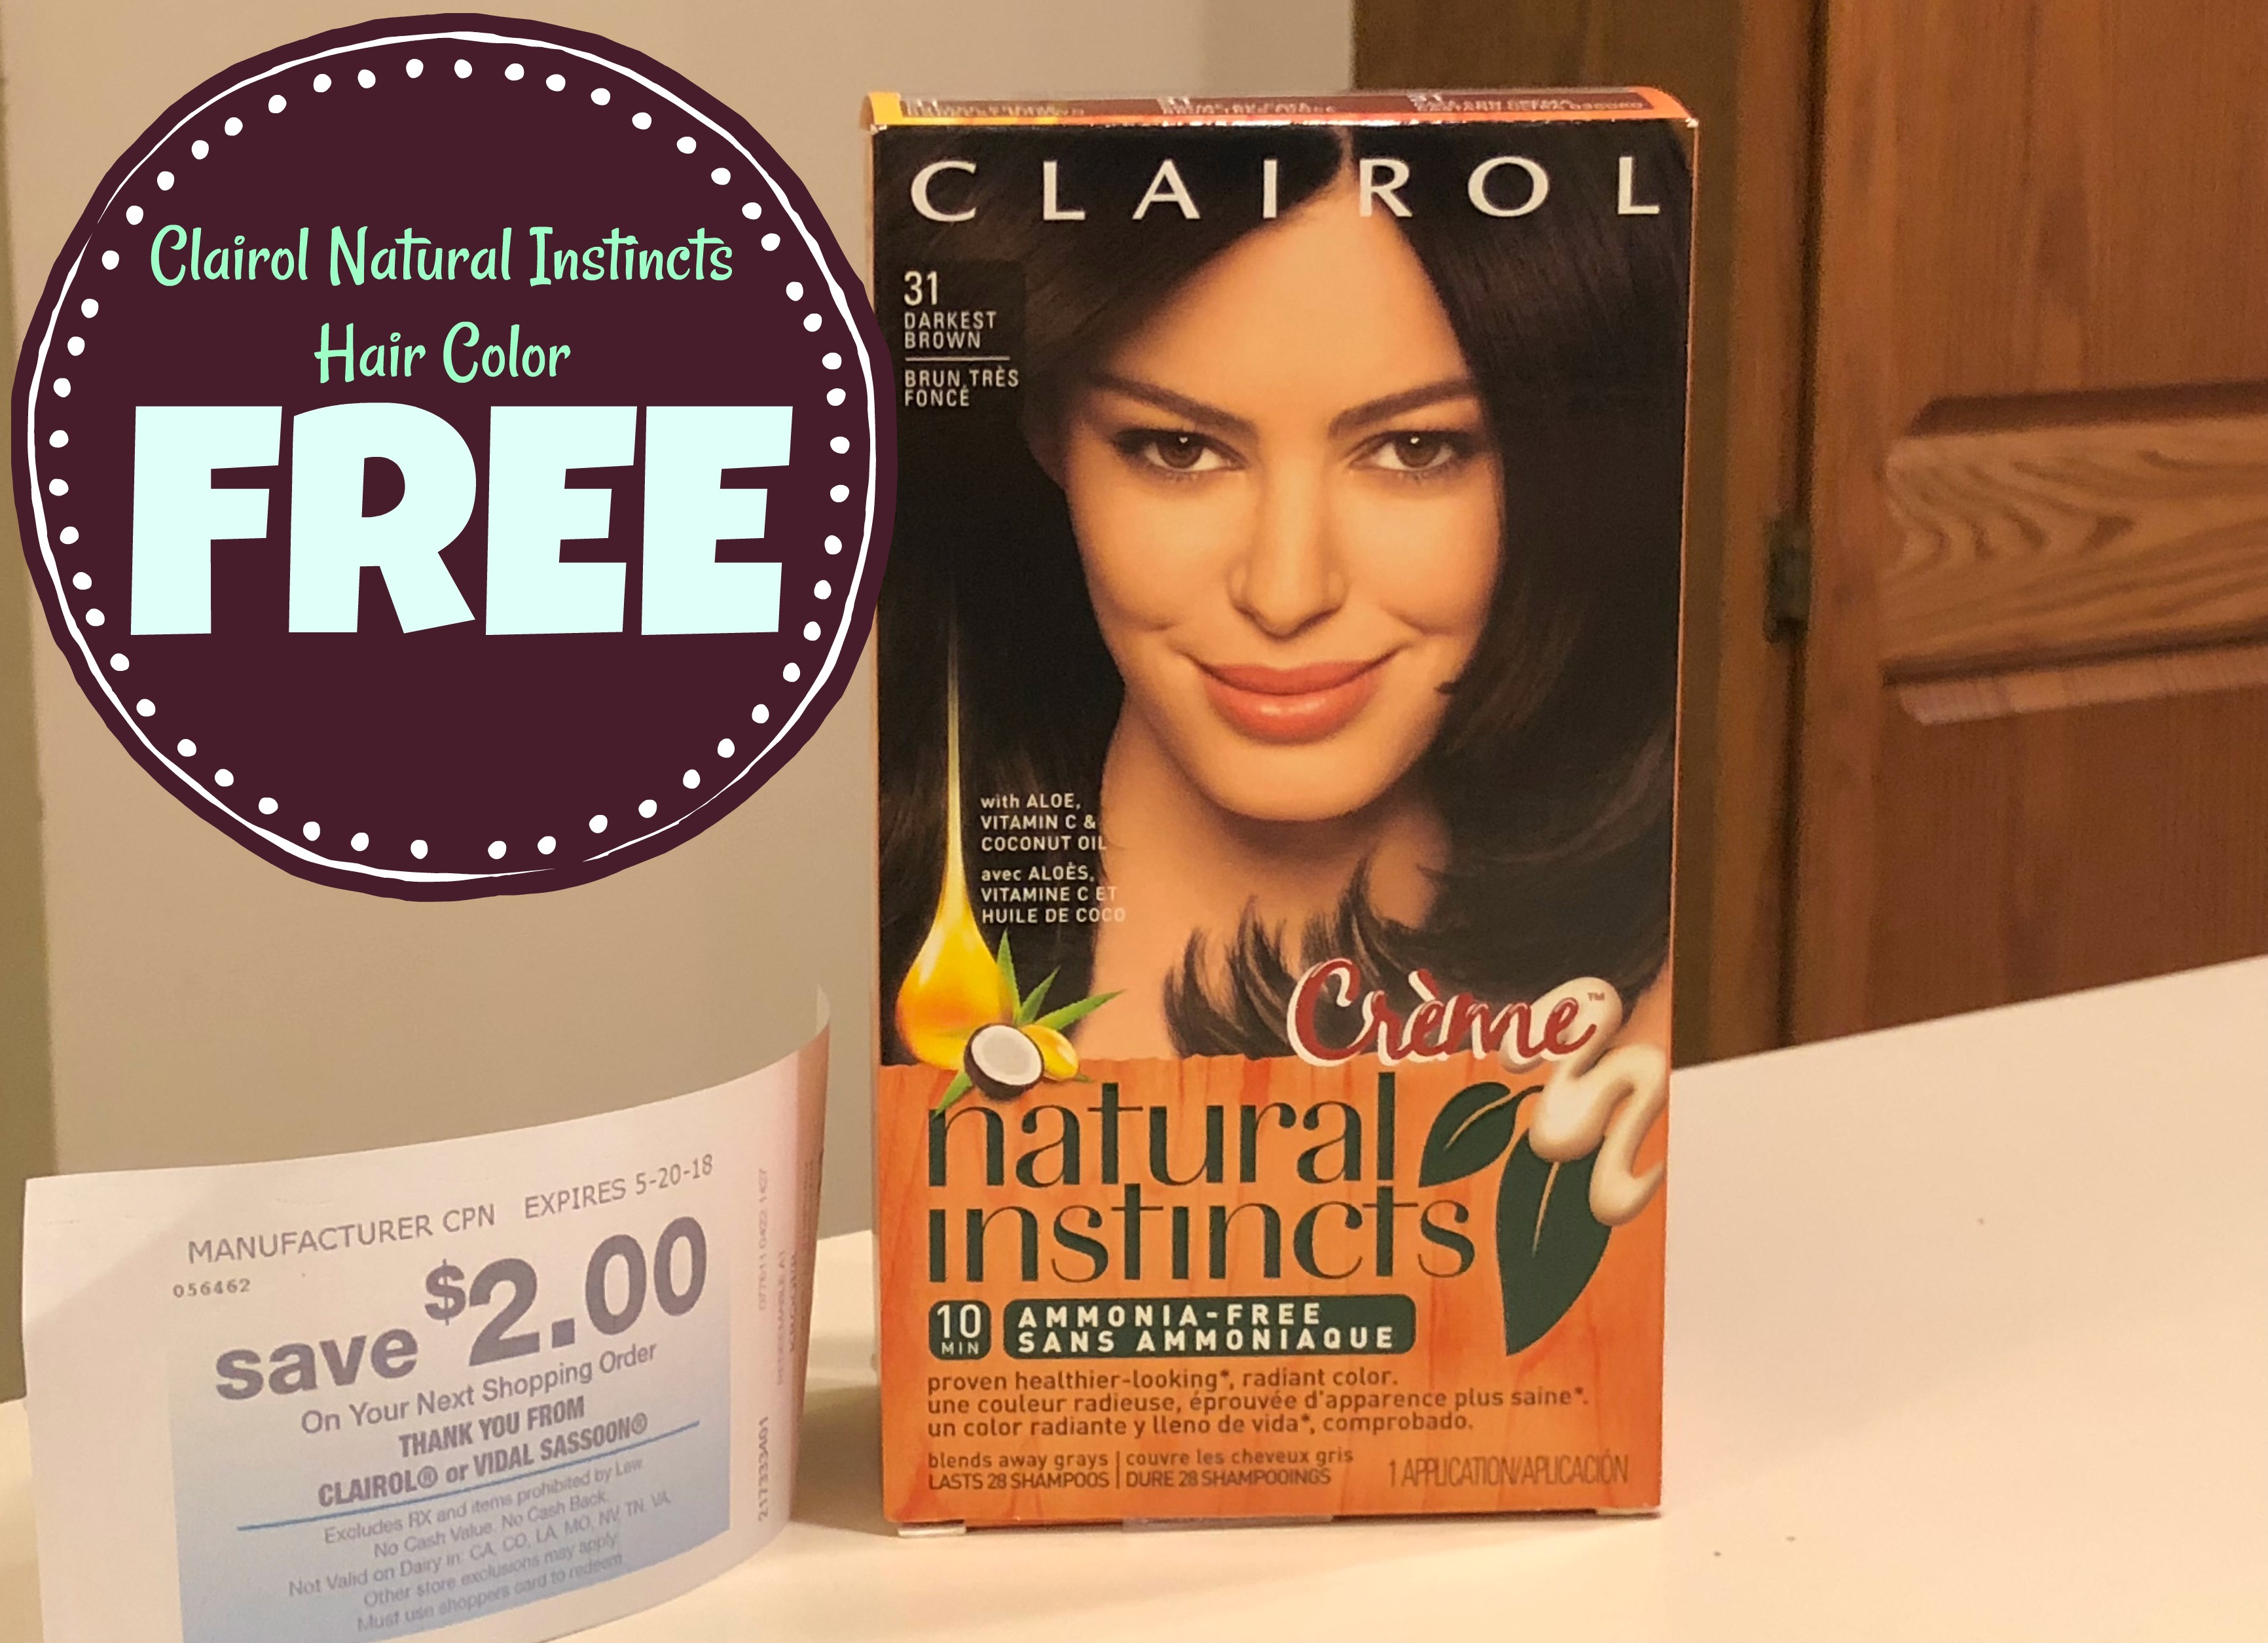 9. Clairol Natural Instincts Semi-Permanent Hair Color - Midnight Indigo - wide 4